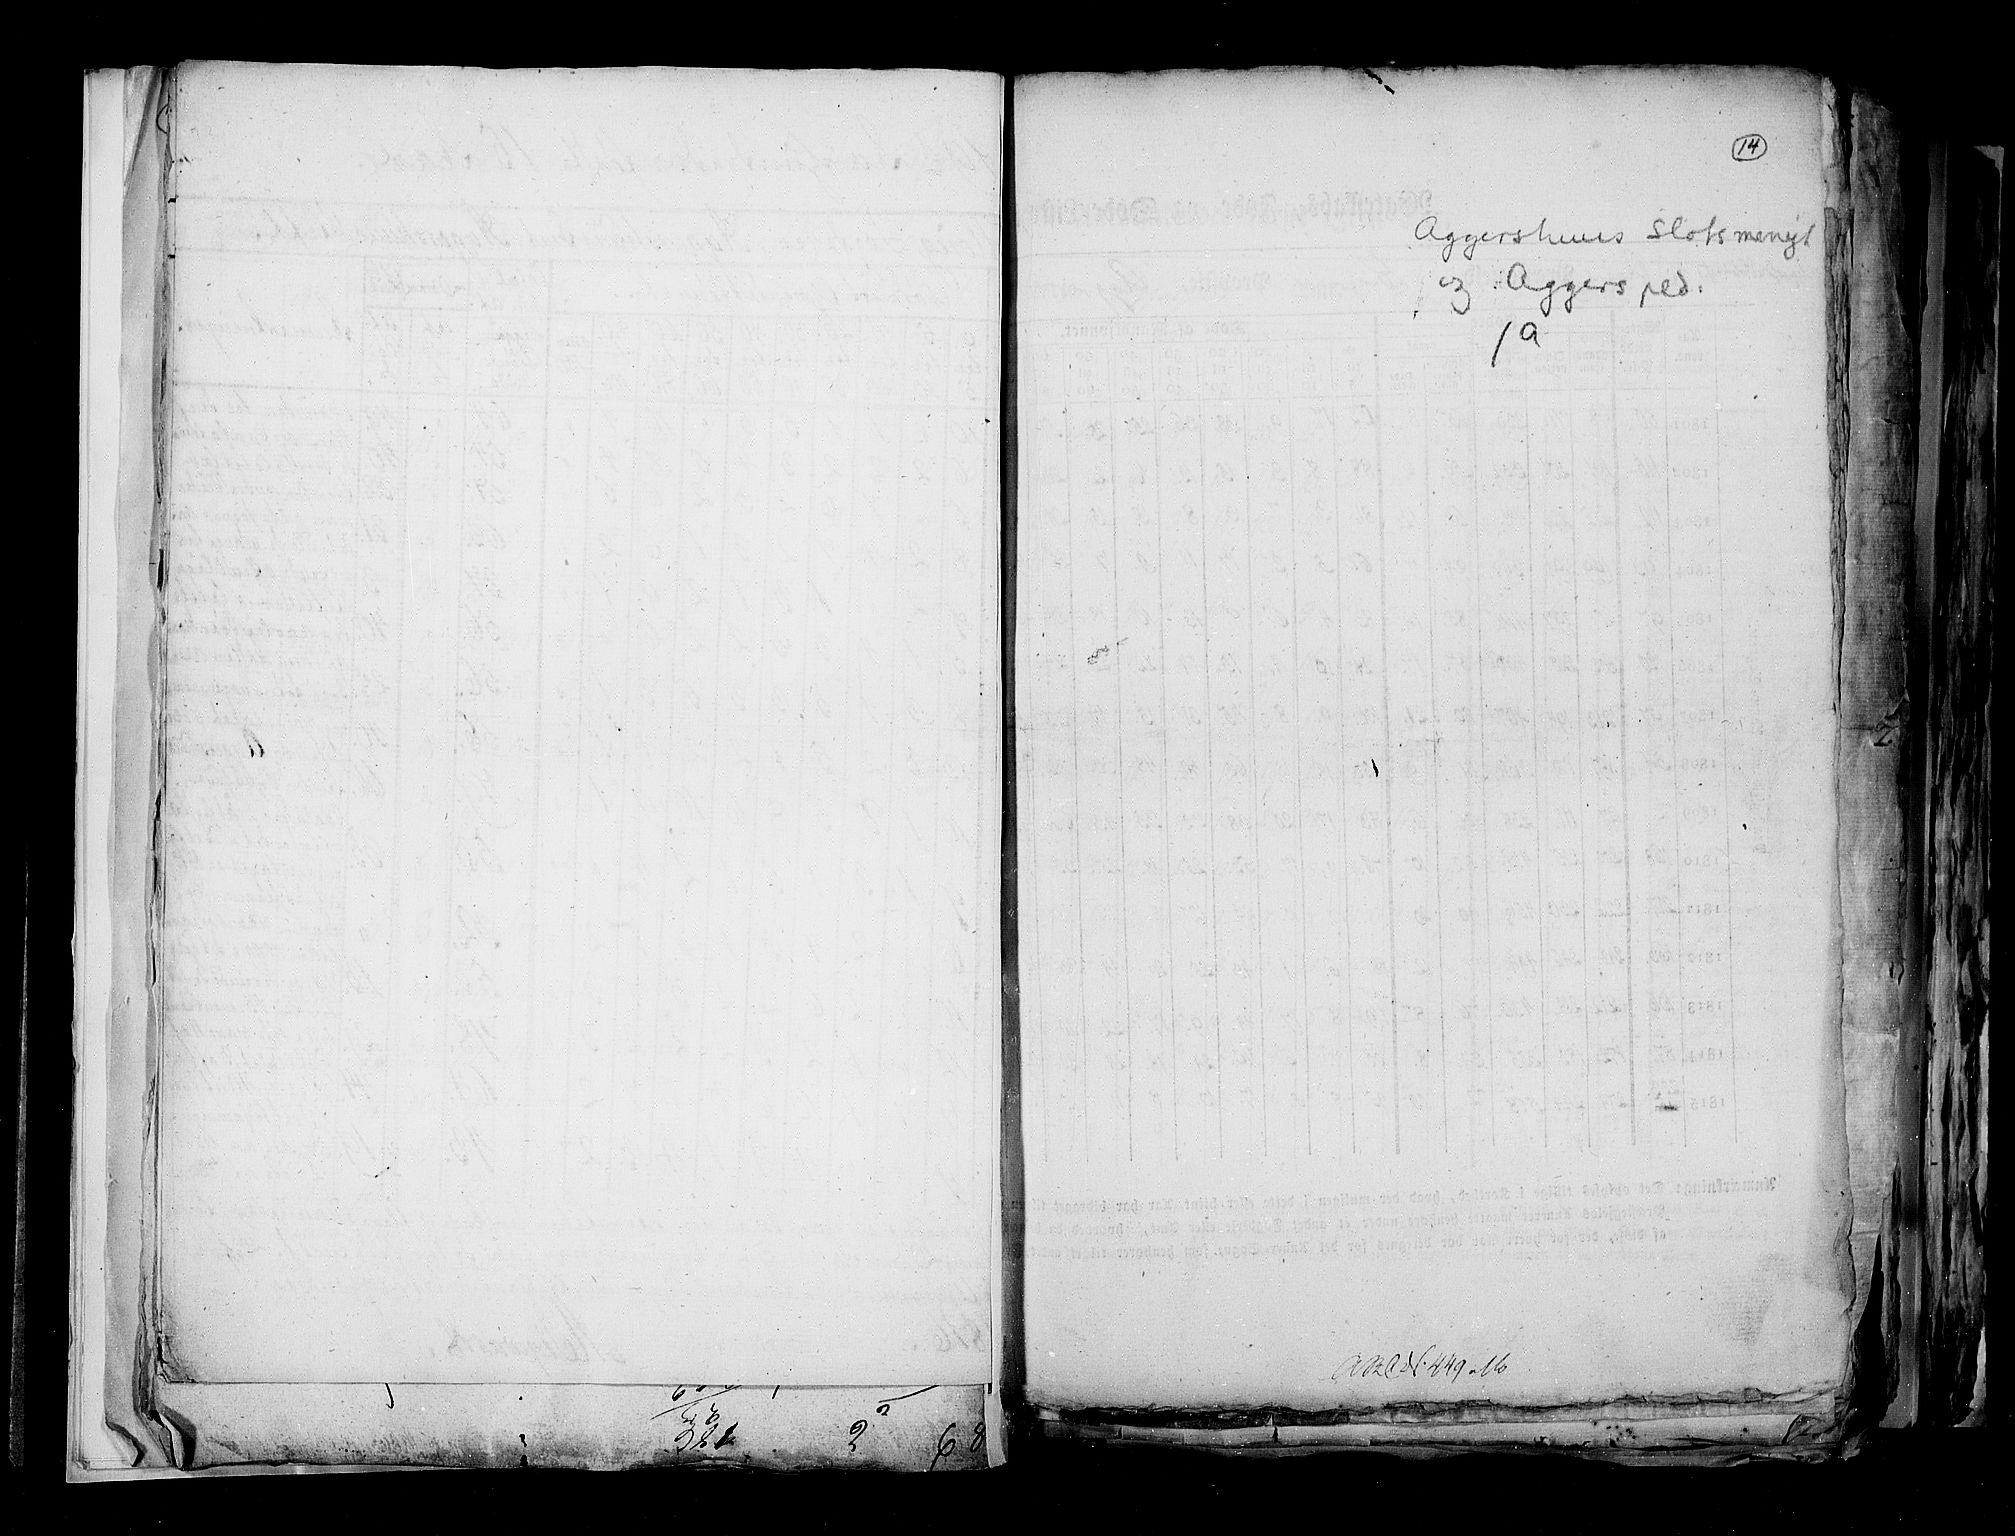 RA, Census 1815, vol. 6: Akershus stift and Kristiansand stift, 1815, p. 14